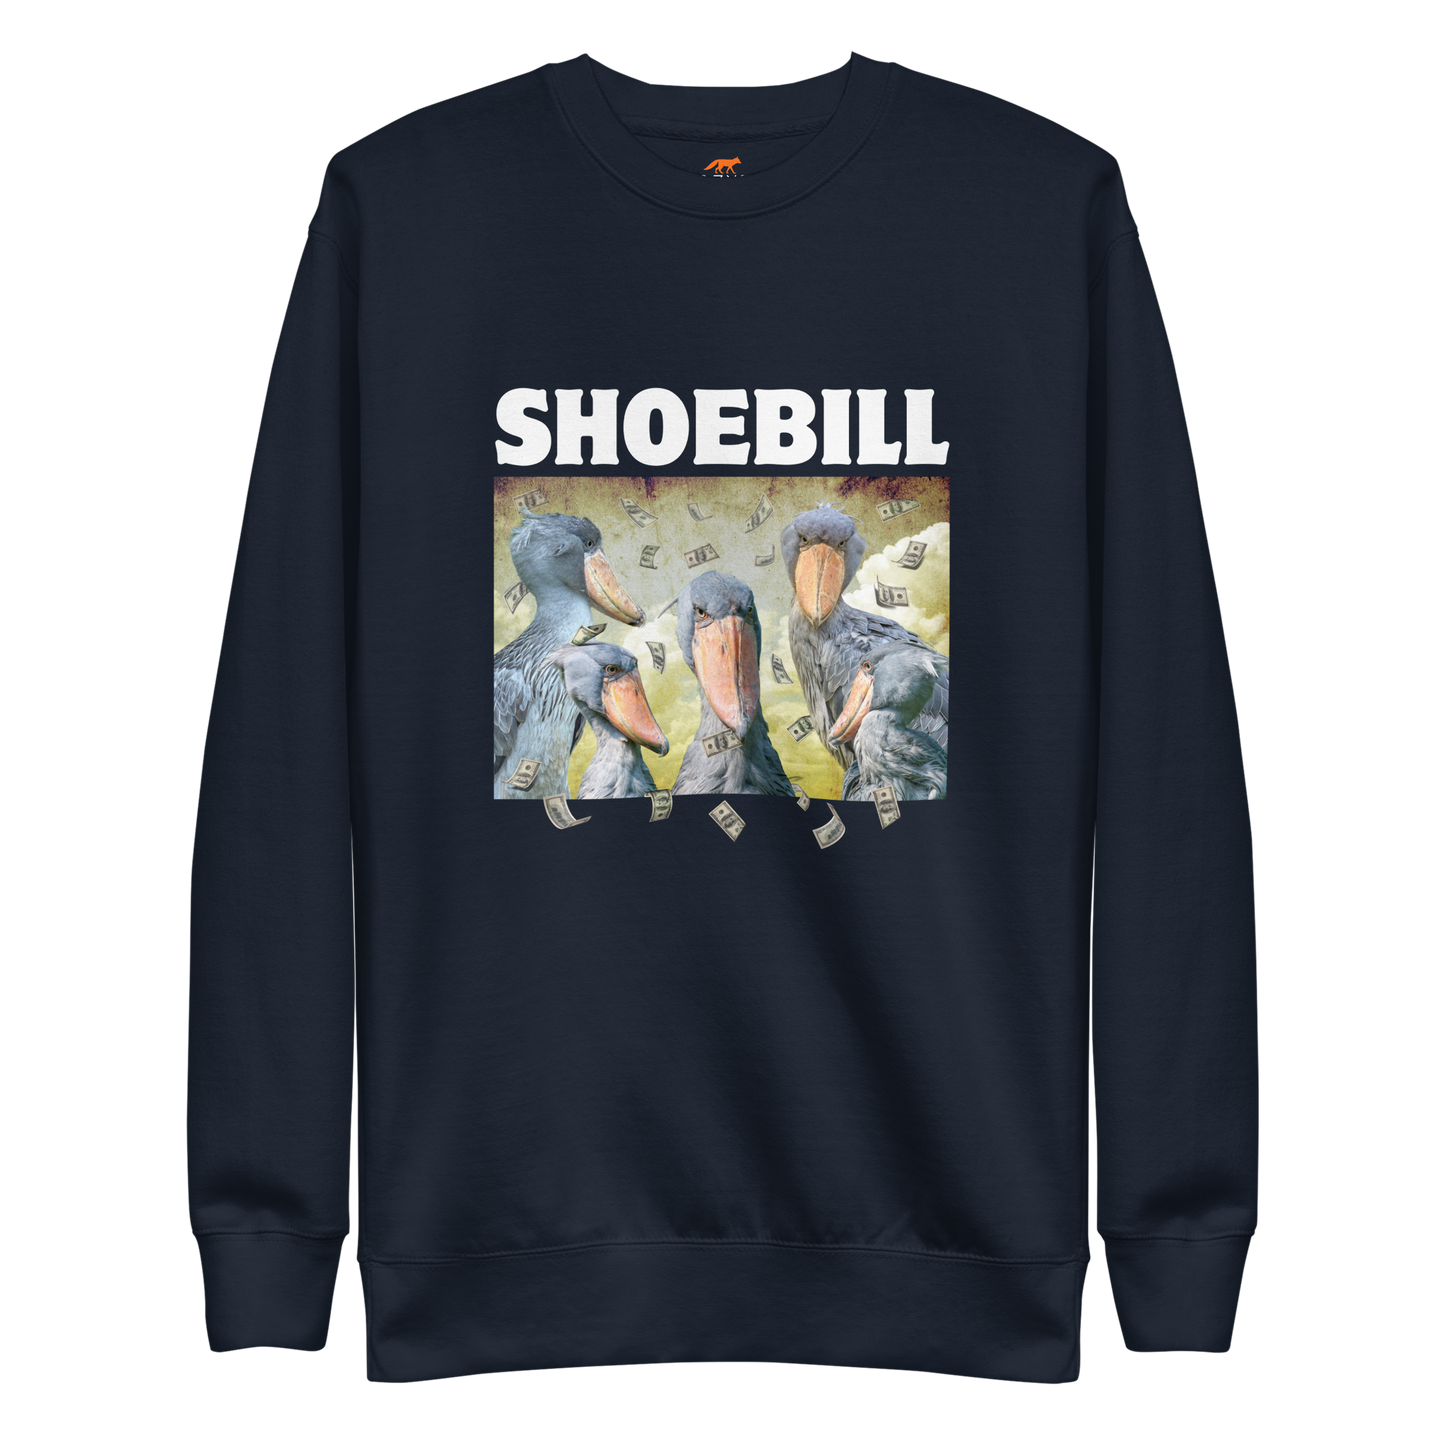 Navy Blazer Premium Shoebill Sweatshirt featuring a cool Shoebill graphic on the chest - Artsy/Funny Graphic Shoebill Stork Sweatshirts - Boozy Fox